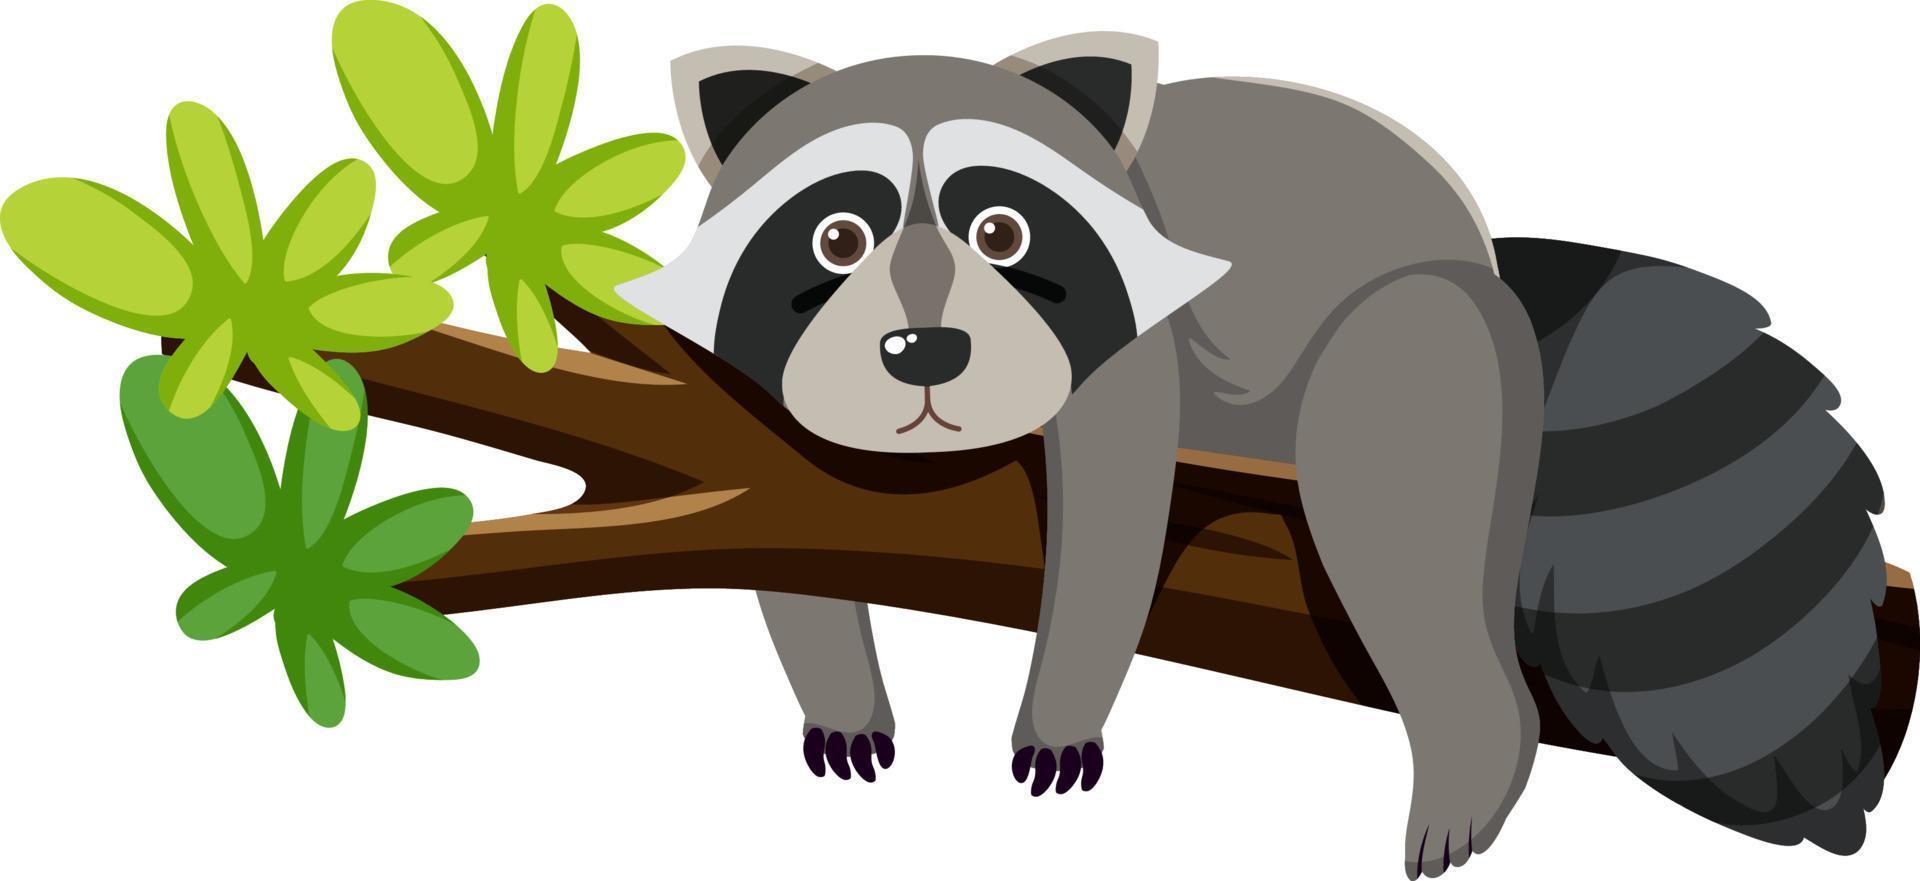 Cute raccoon in flat cartoon style vector